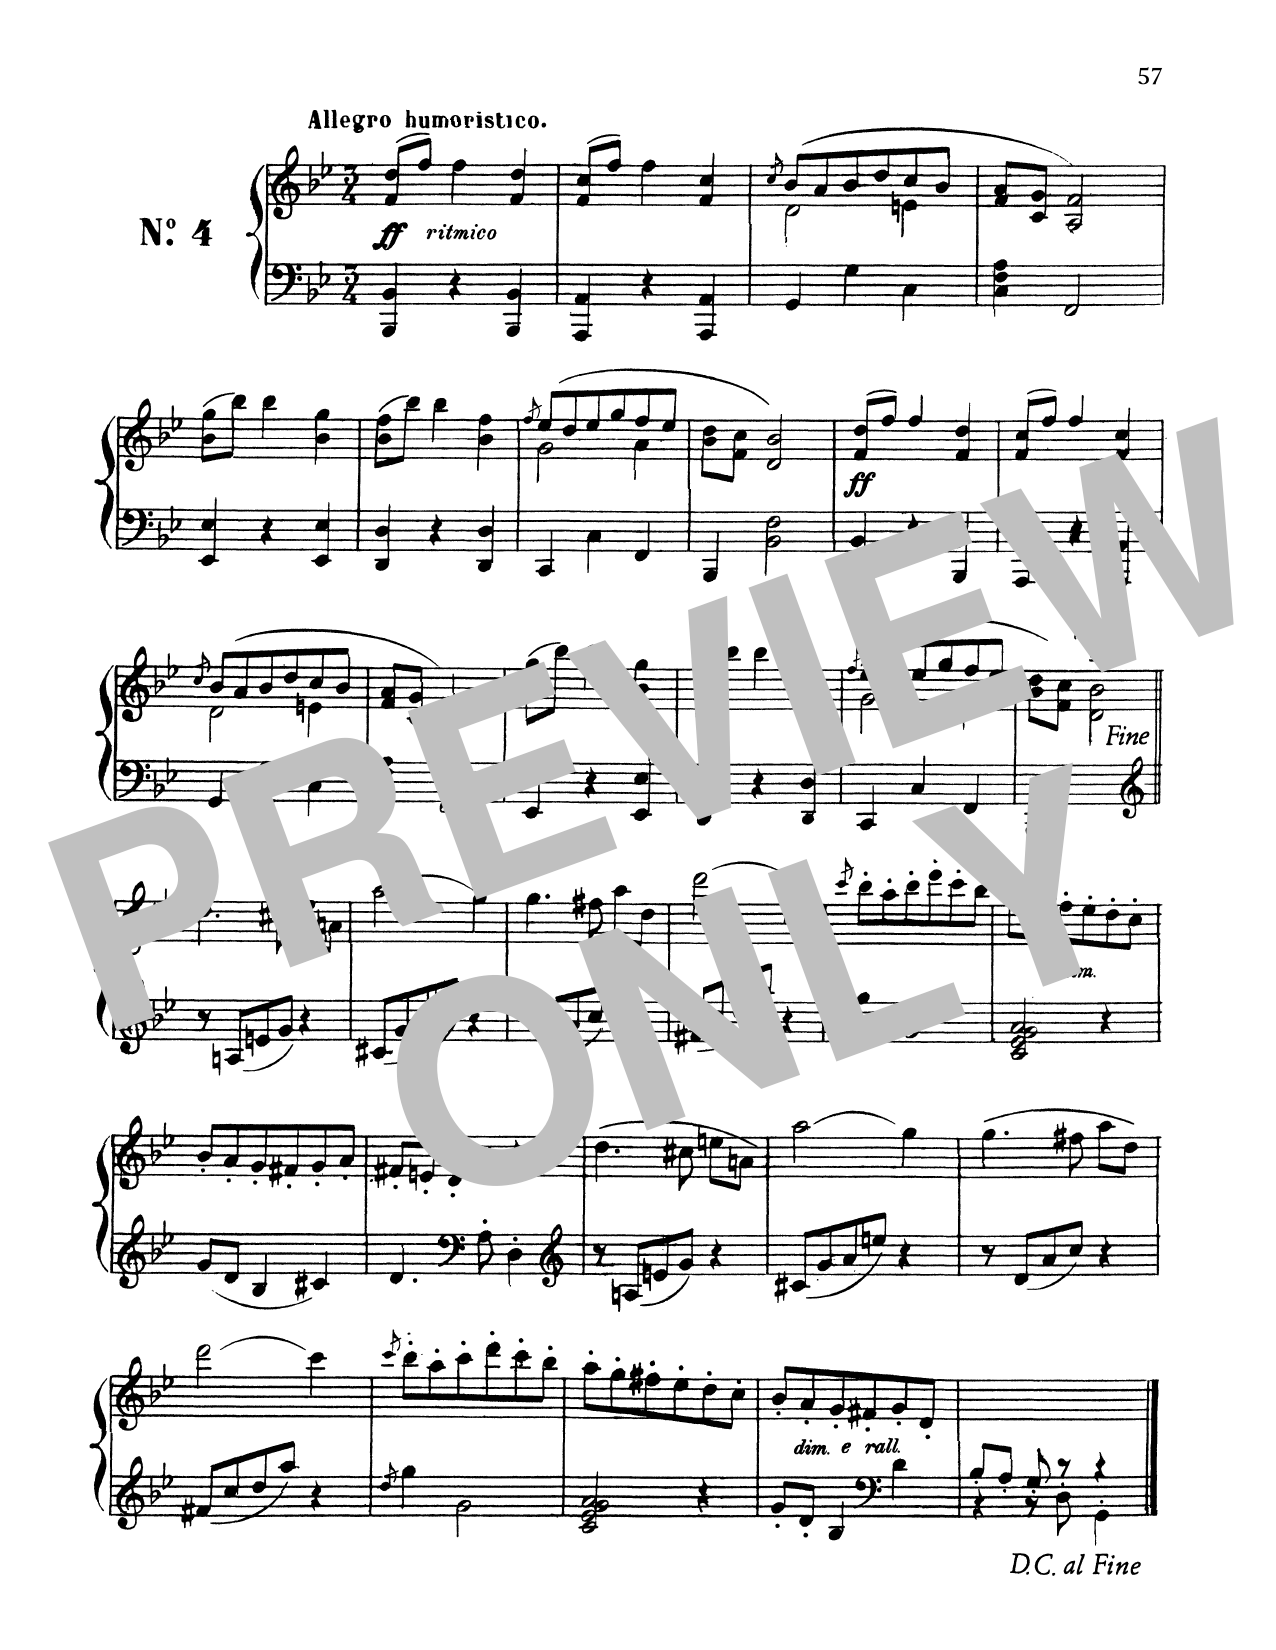 Enrique Granados Allegro Humoristico Sheet Music Notes & Chords for Piano - Download or Print PDF